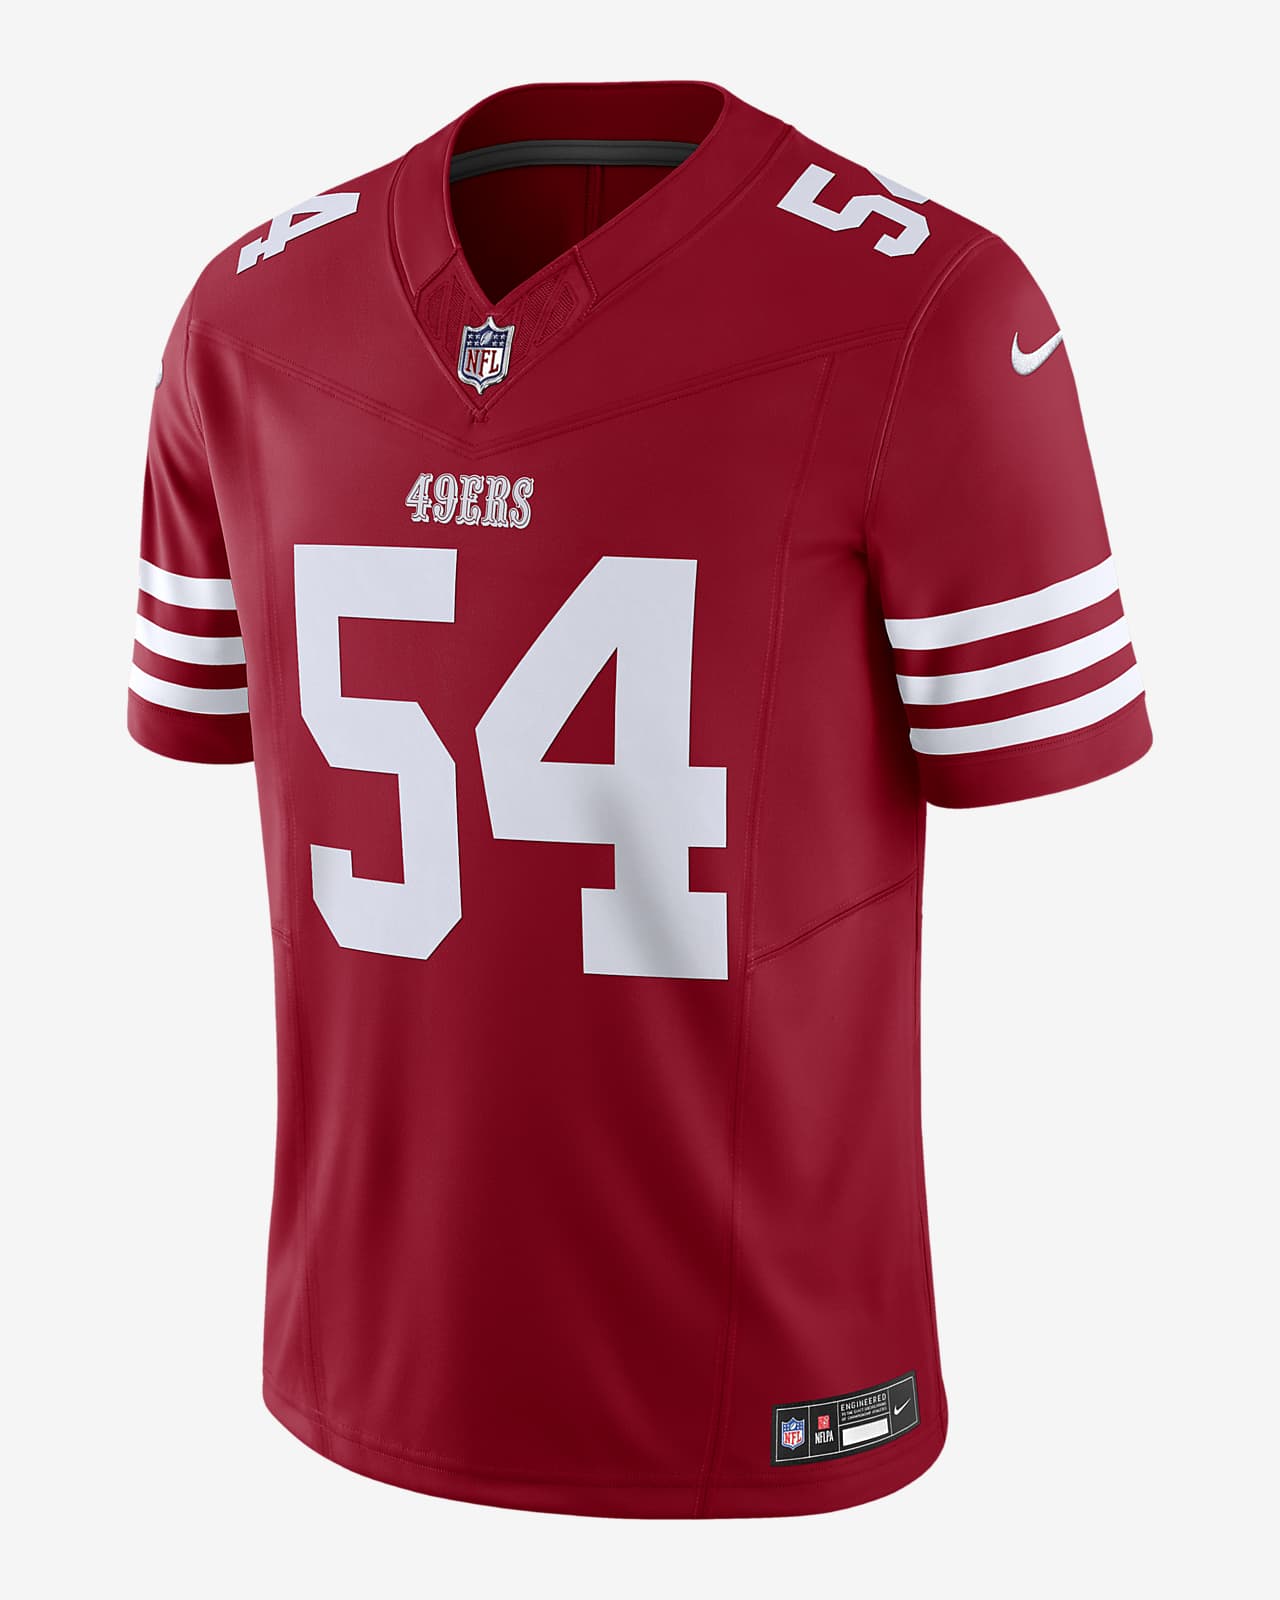 Jersey de fútbol americano Nike Dri-FIT de la NFL Limited para hombre Fred Warner San Francisco 49ers